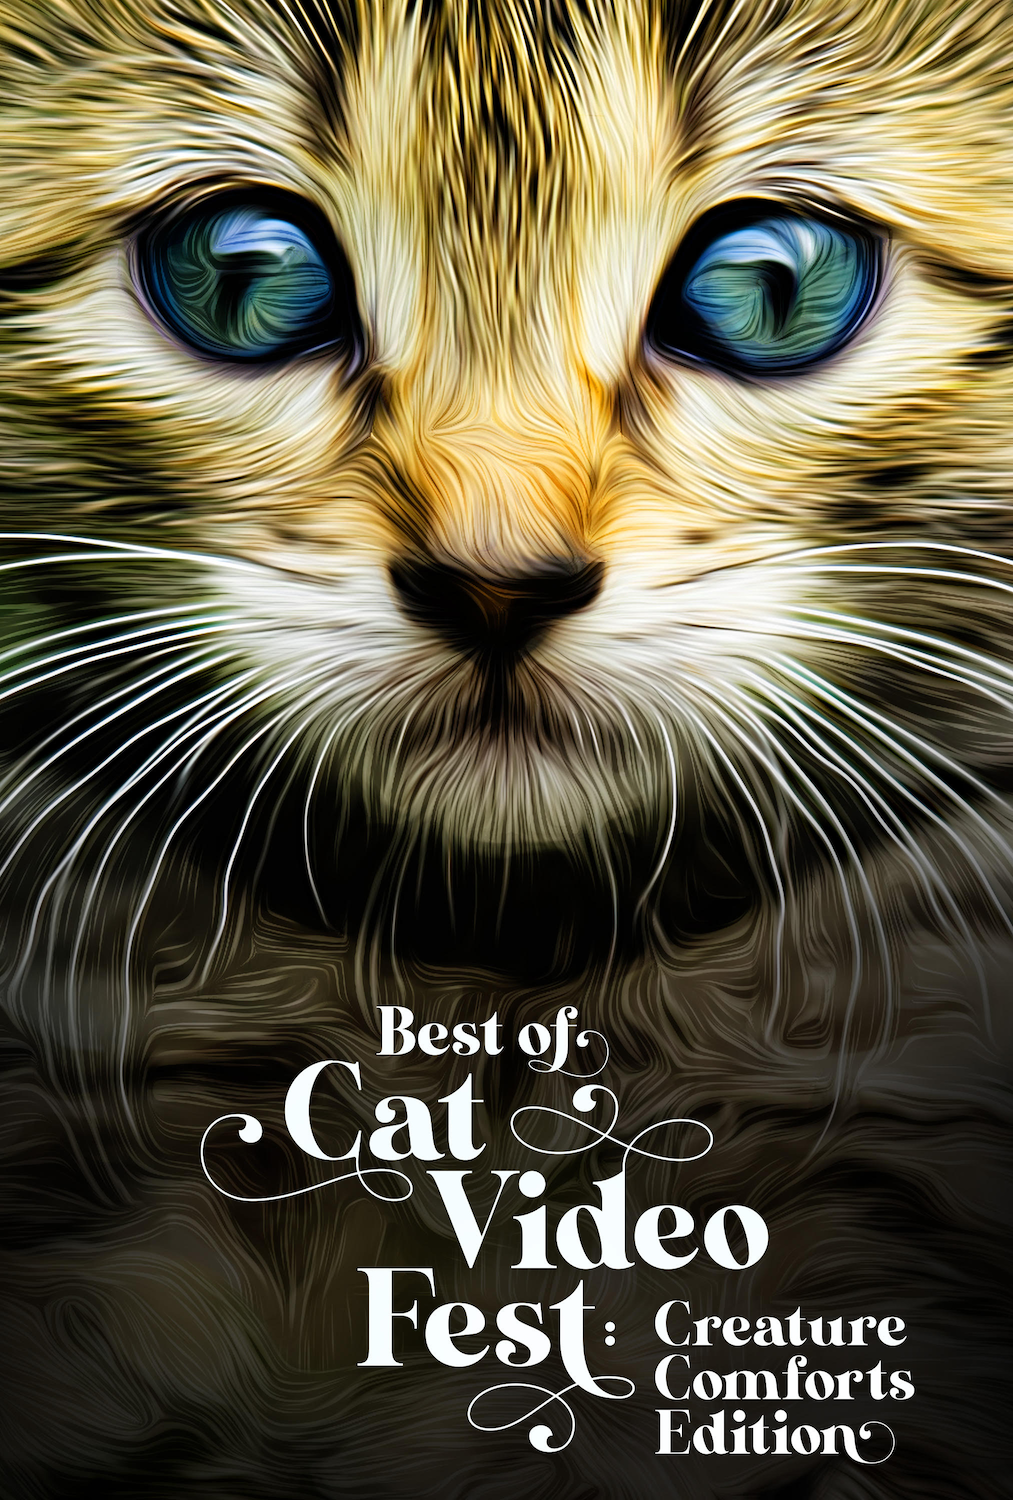 Best of Cat Video Fest